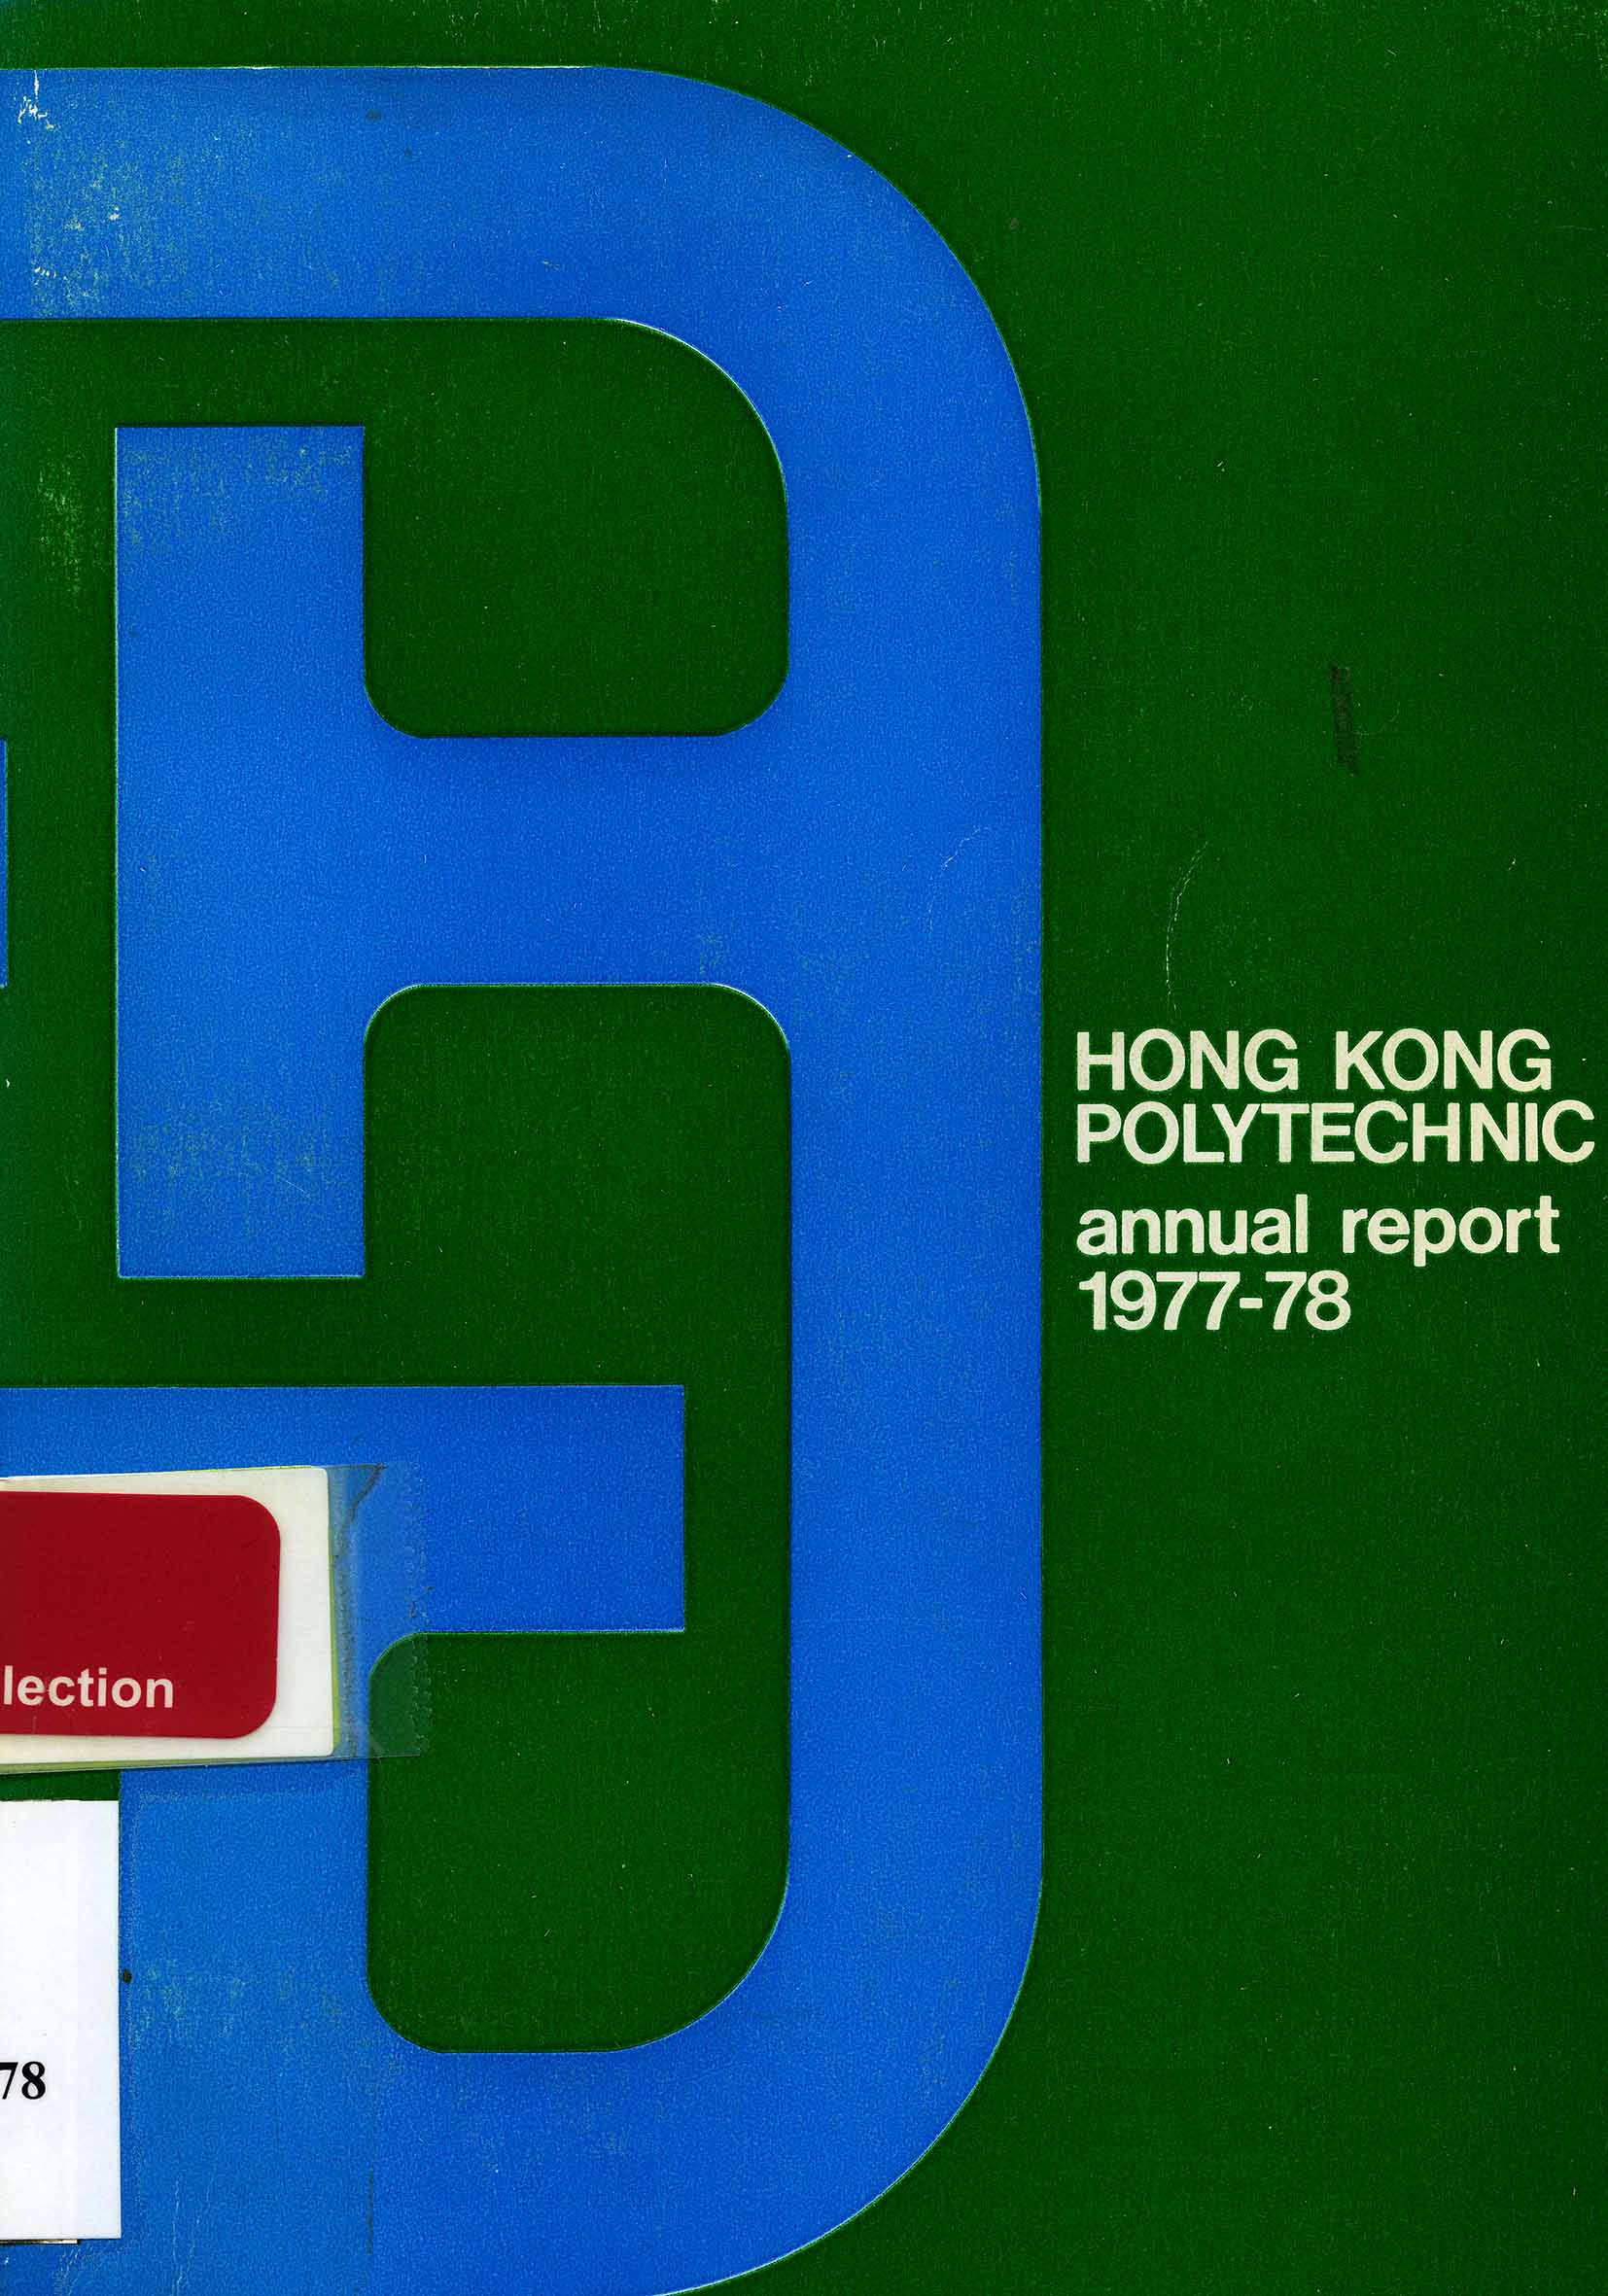 Hong Kong Polytechnic Annual Report 1977/78